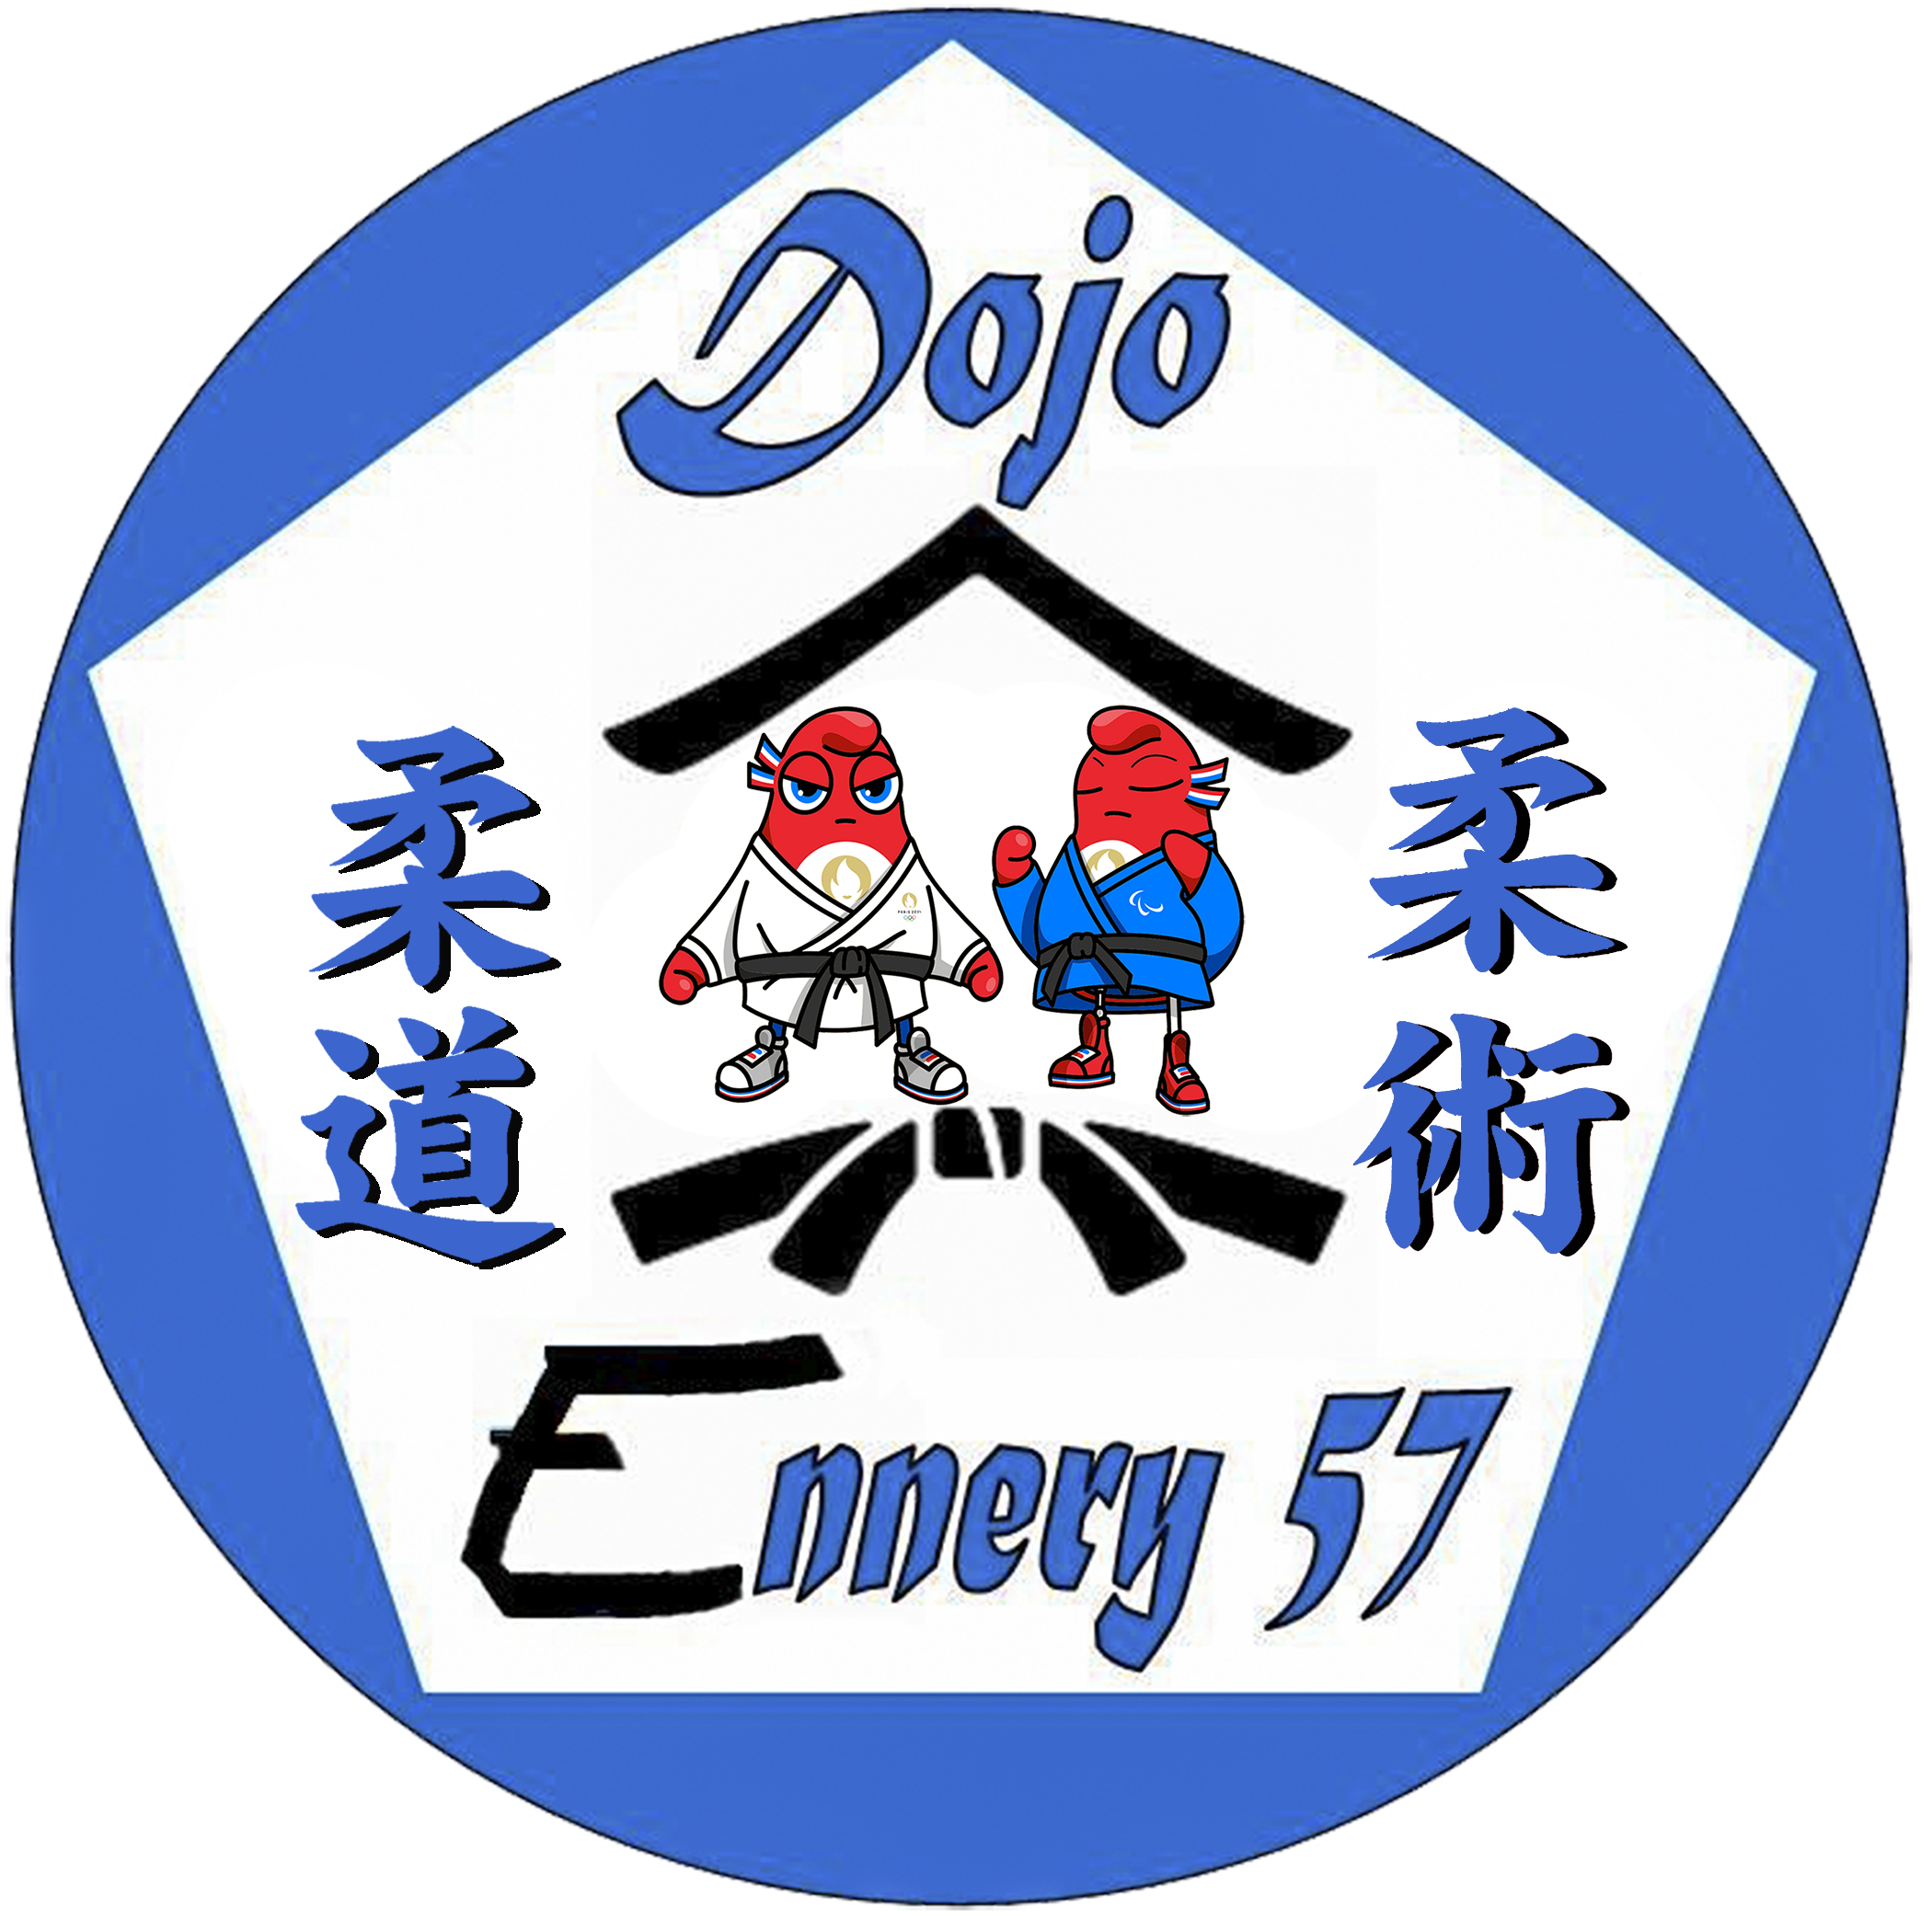 Dojo ENNERY 57